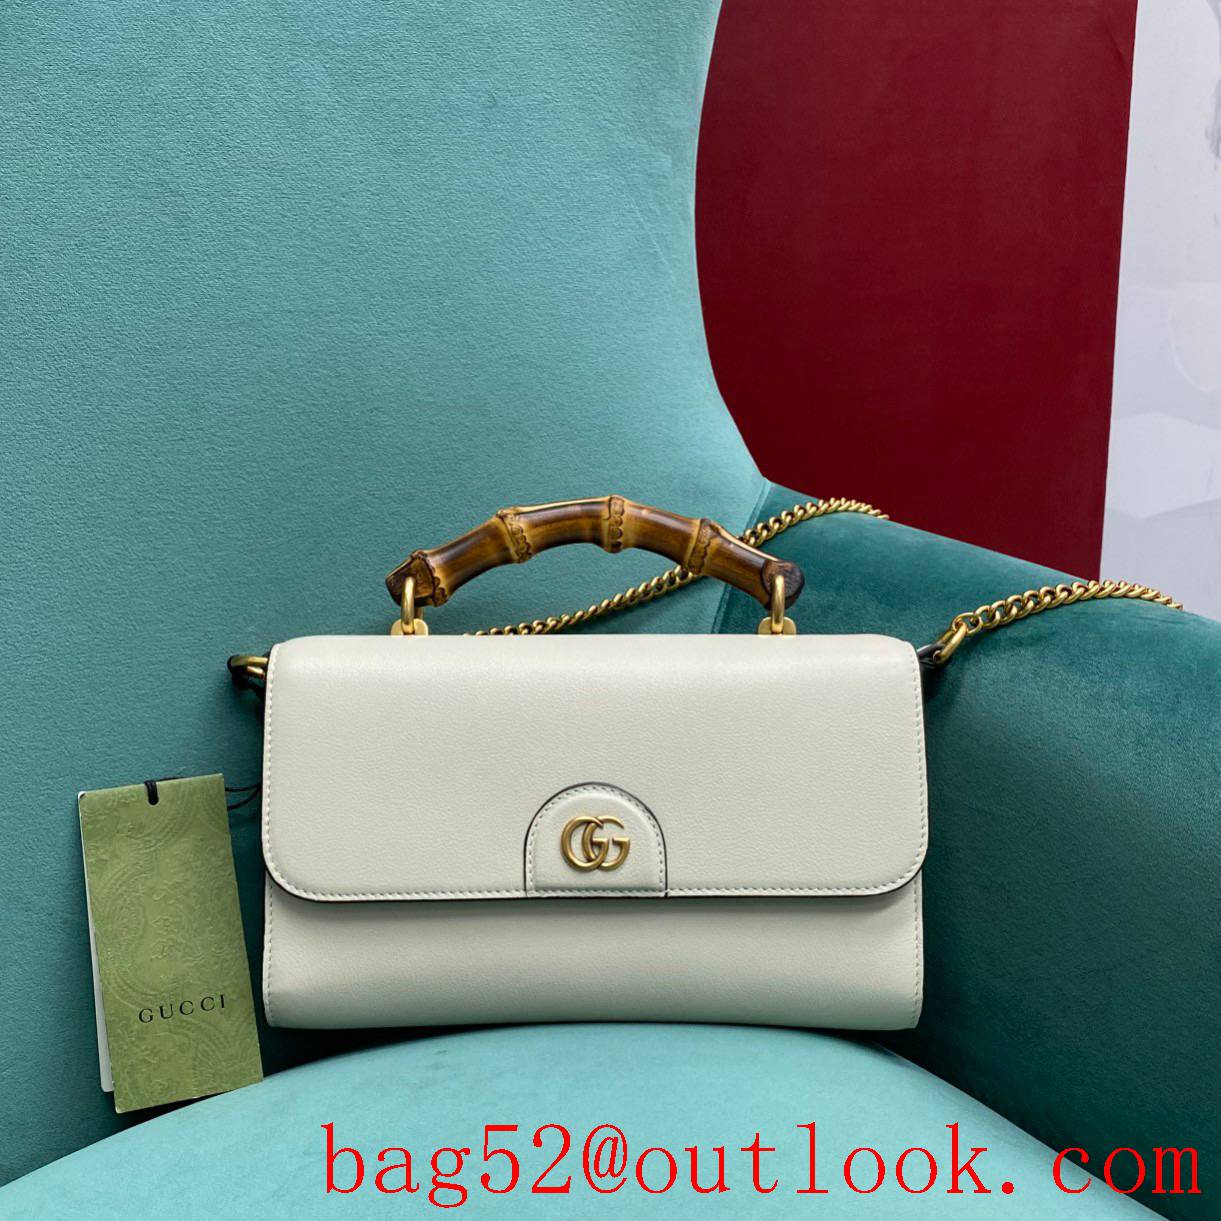 Gucci leather Bamboo chain white shoulder handbag